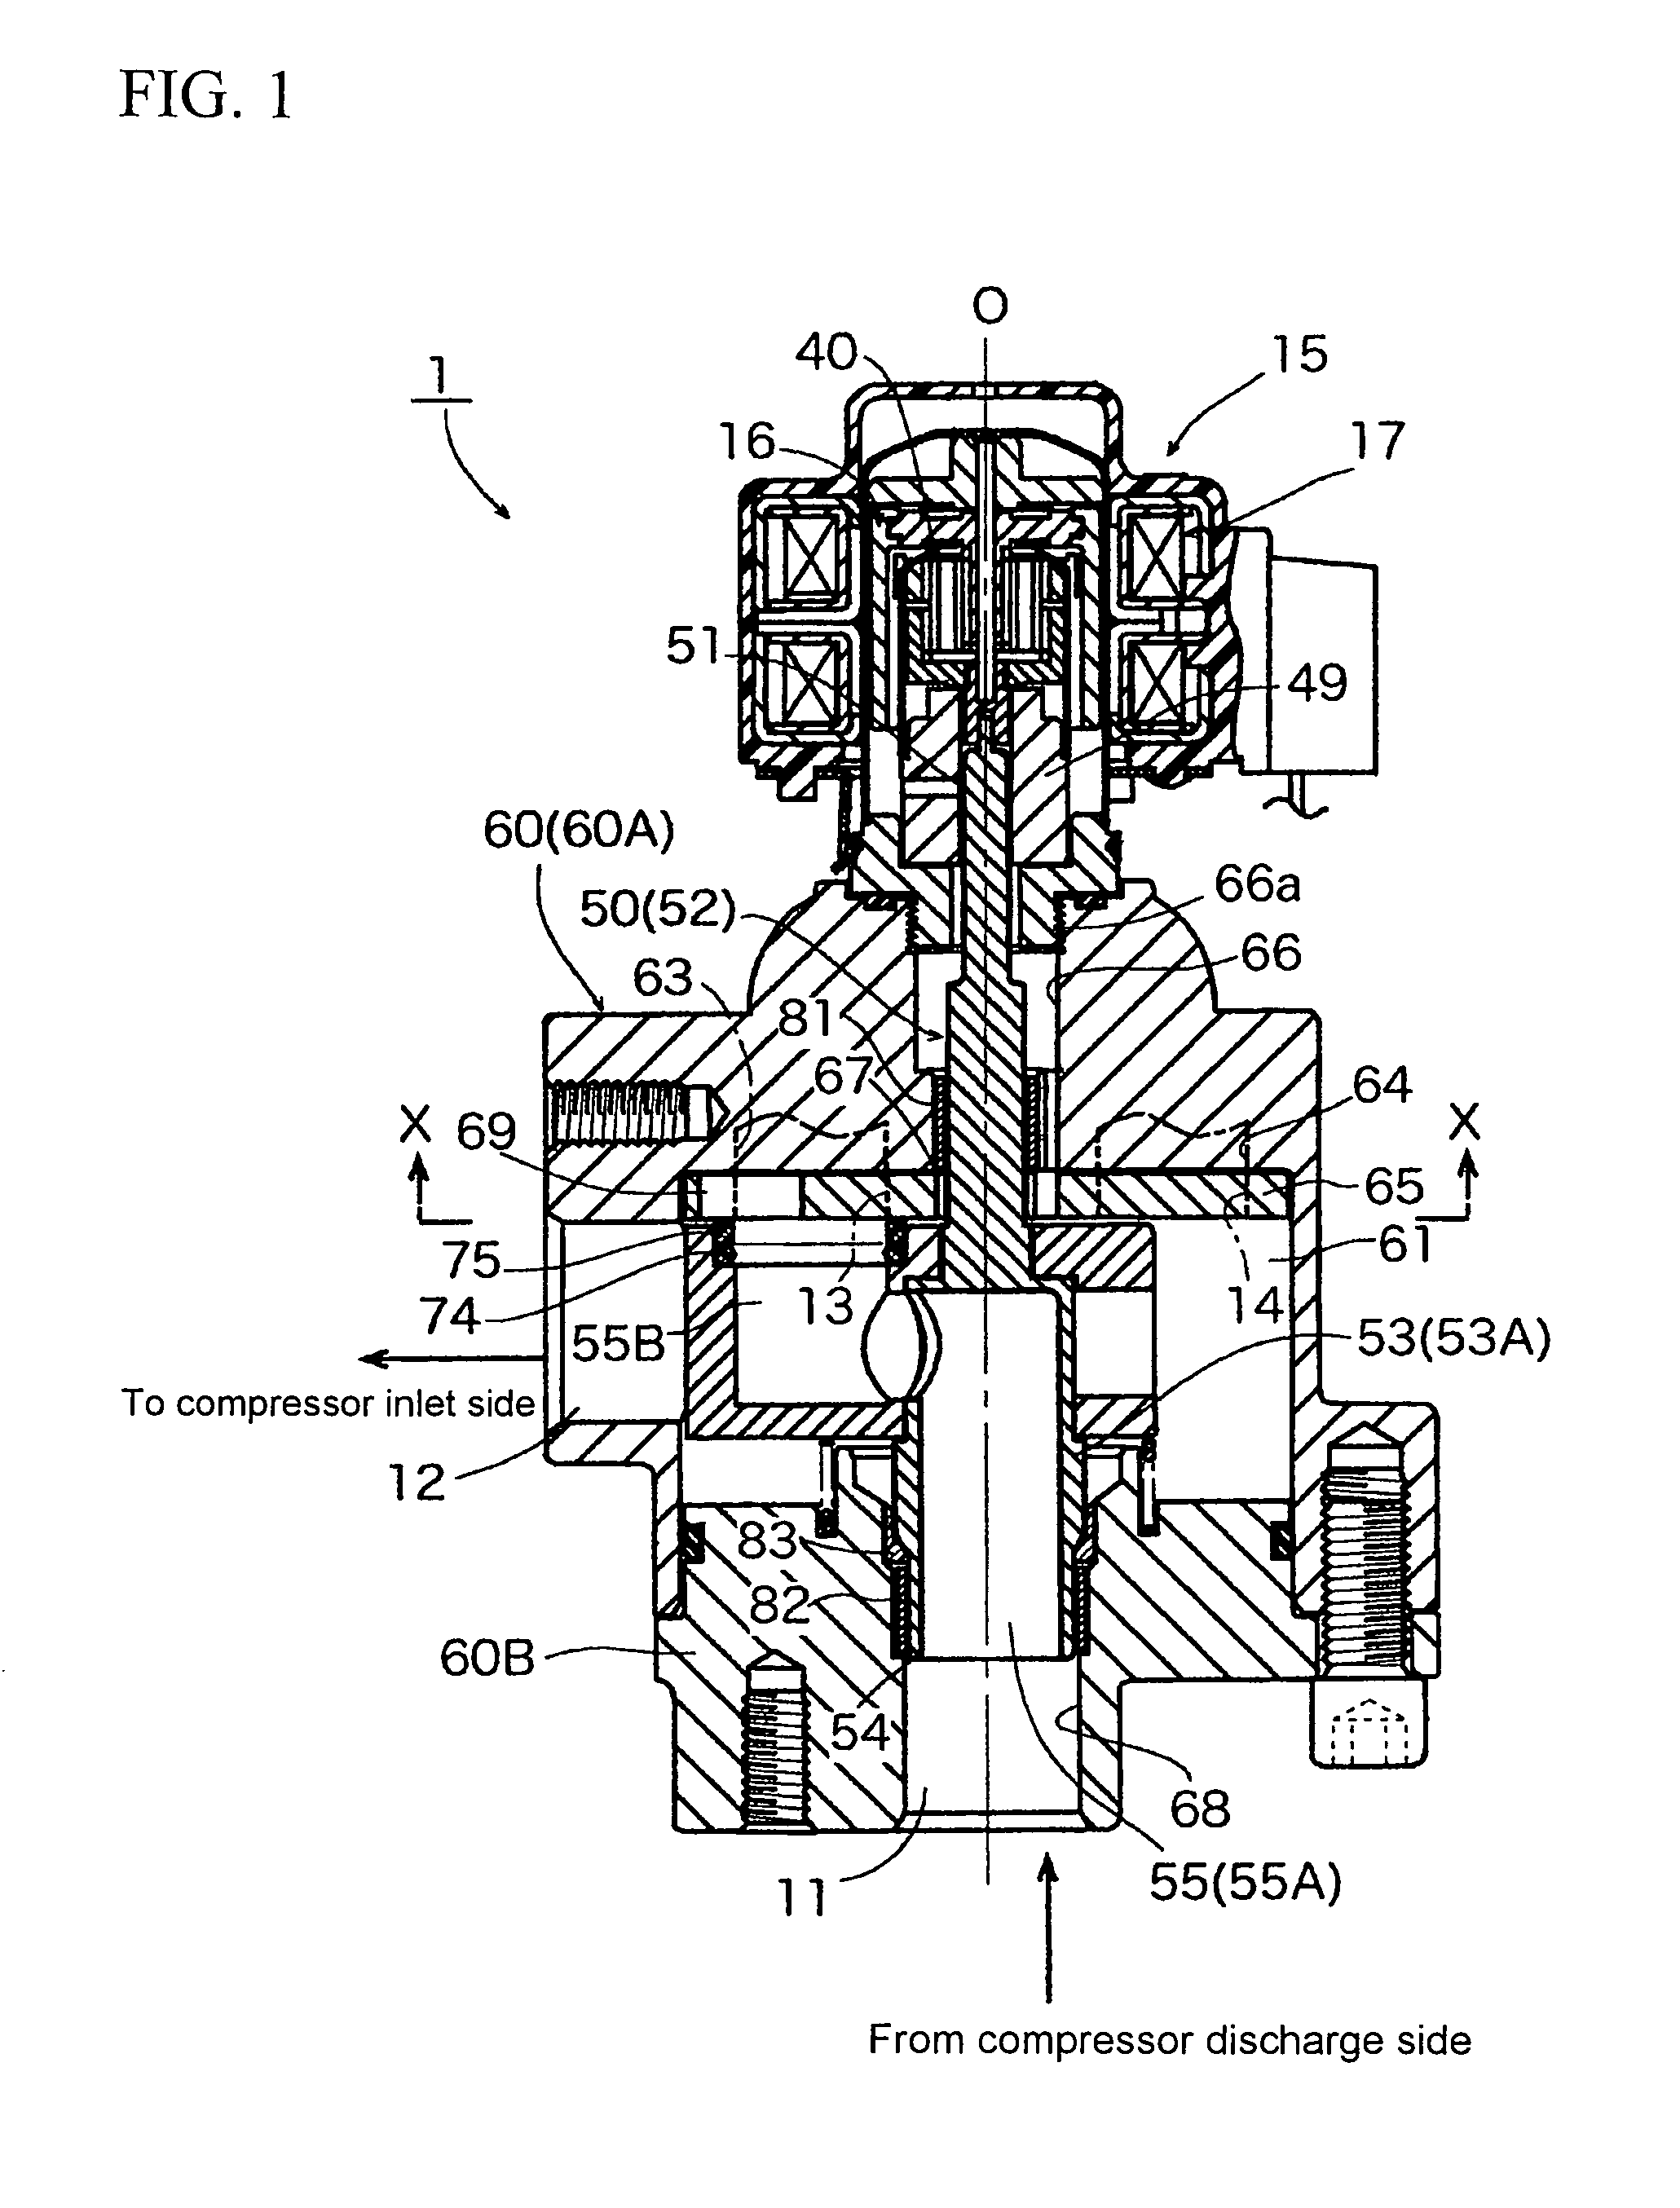 Multi-way selector valve